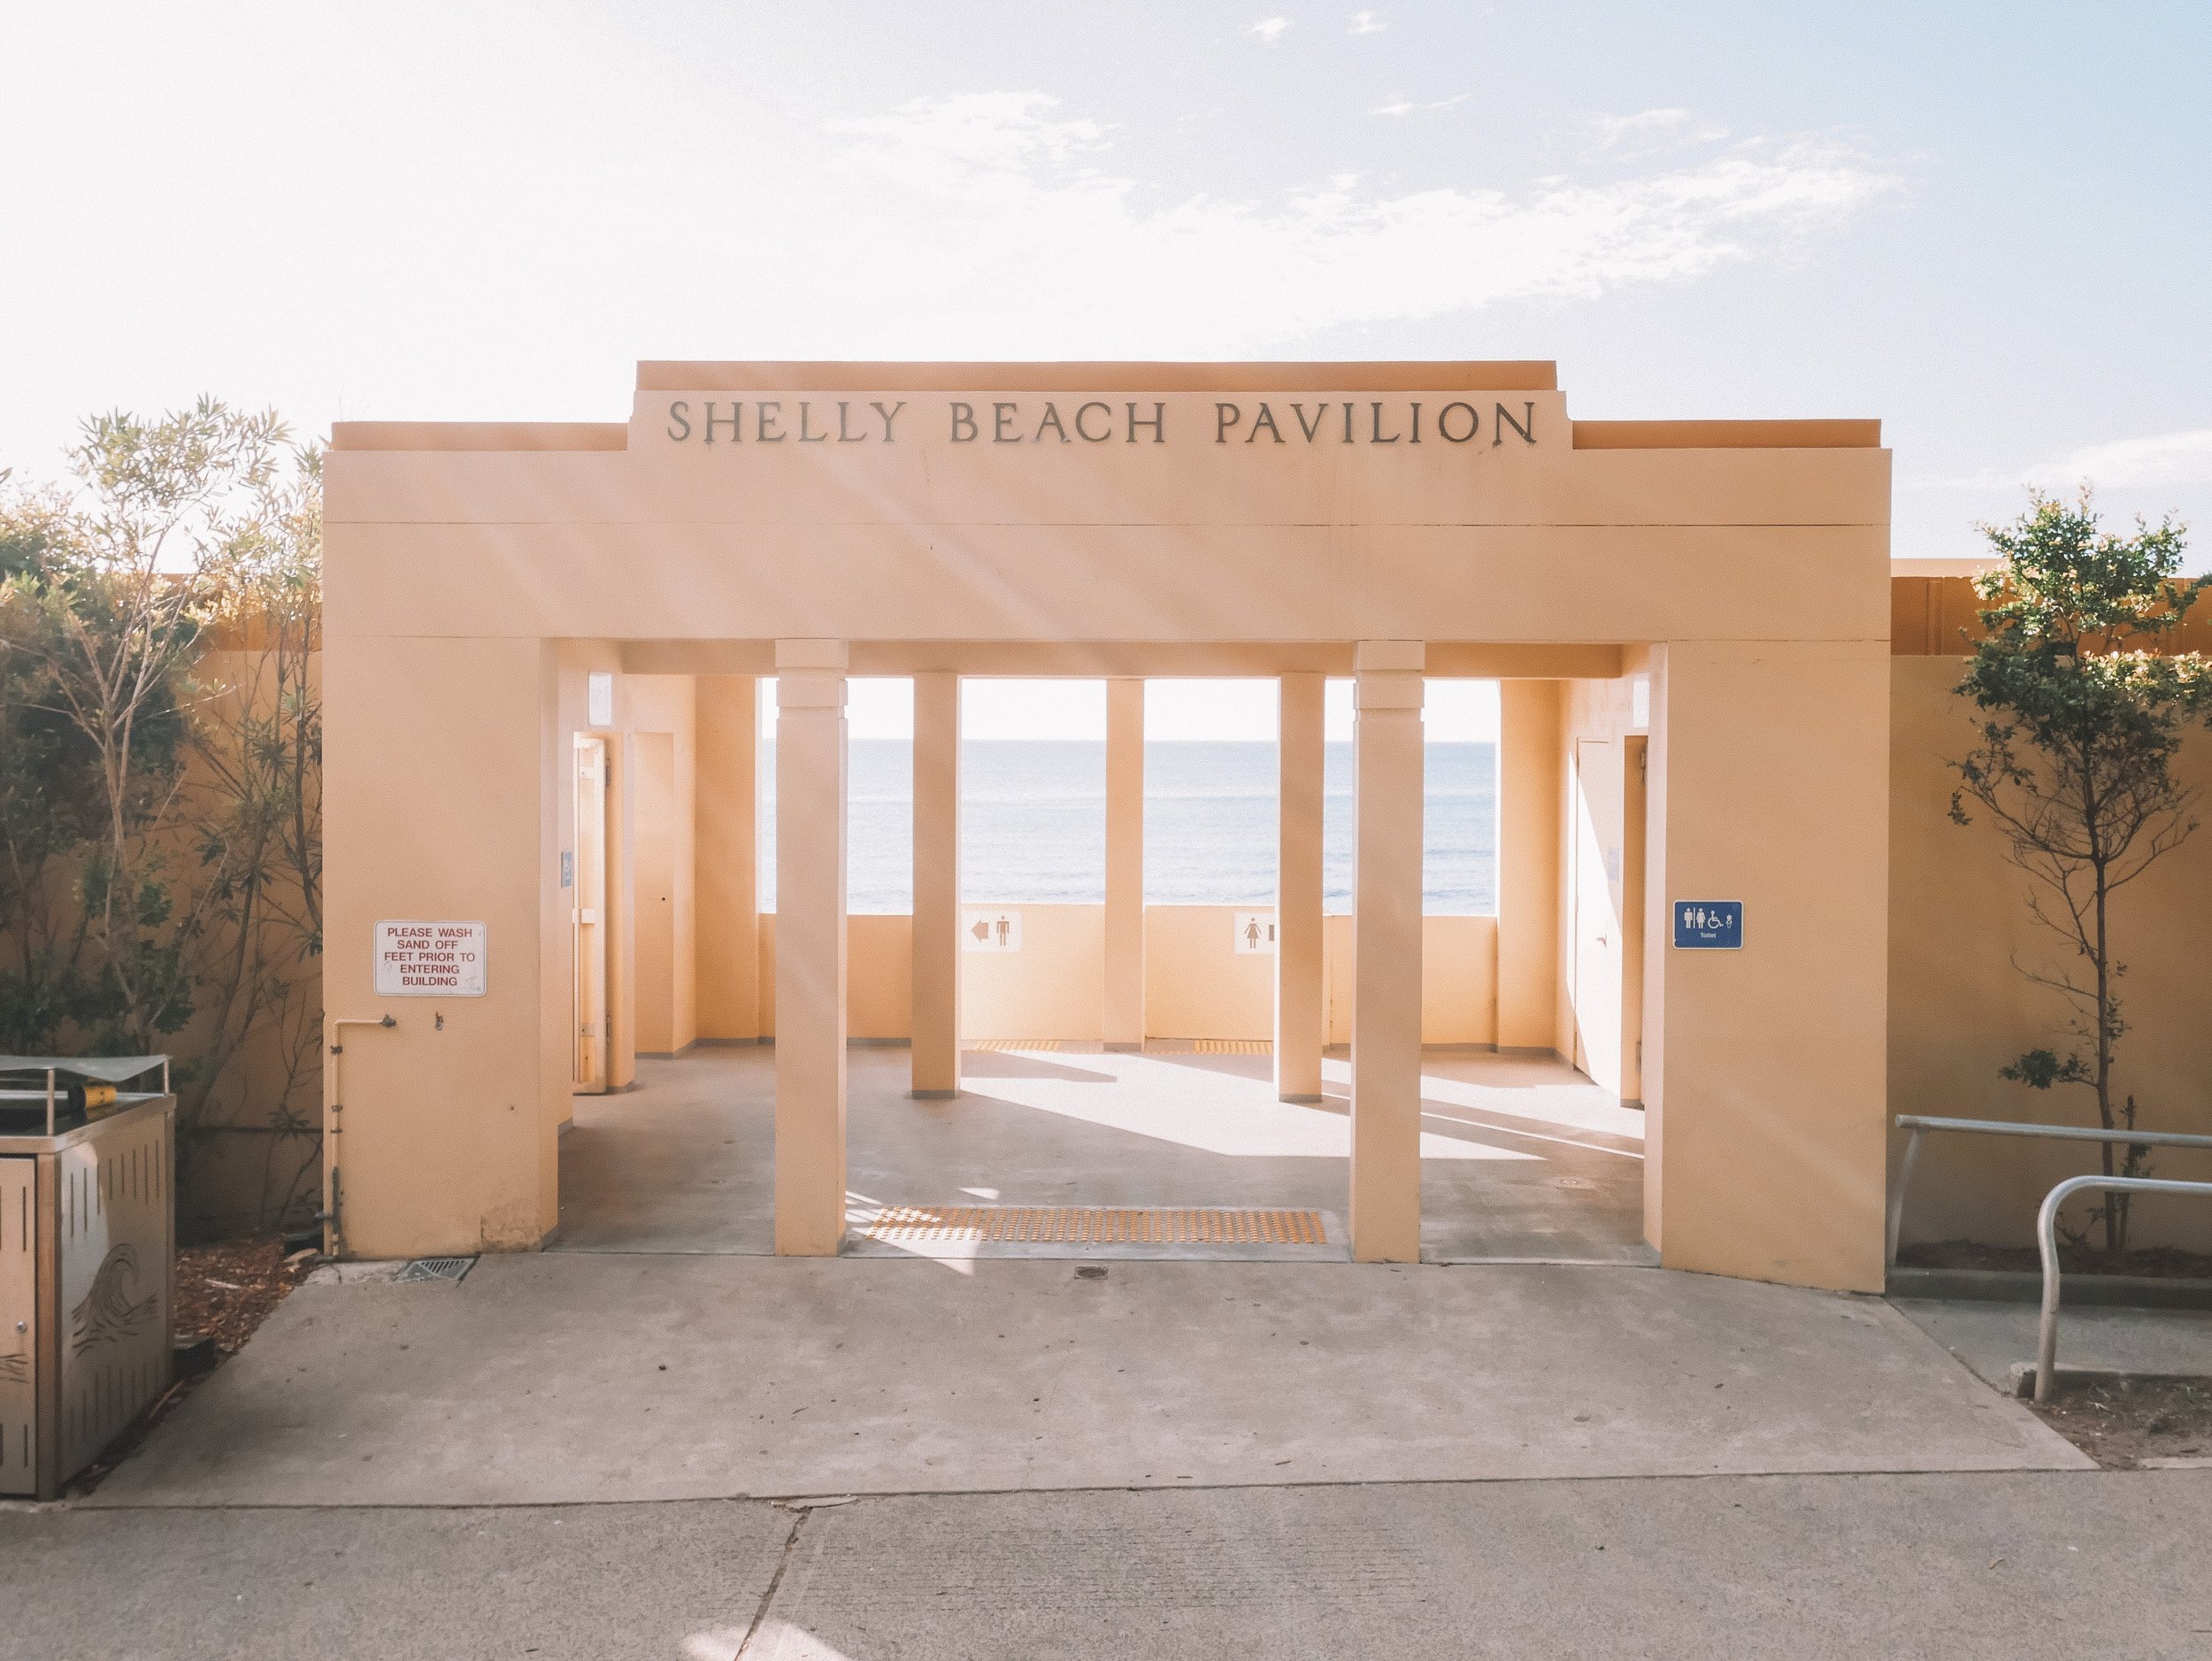 Shelly Beach Pavilion - Cronulla - Sydney - New South Wales (NSW) - Australia